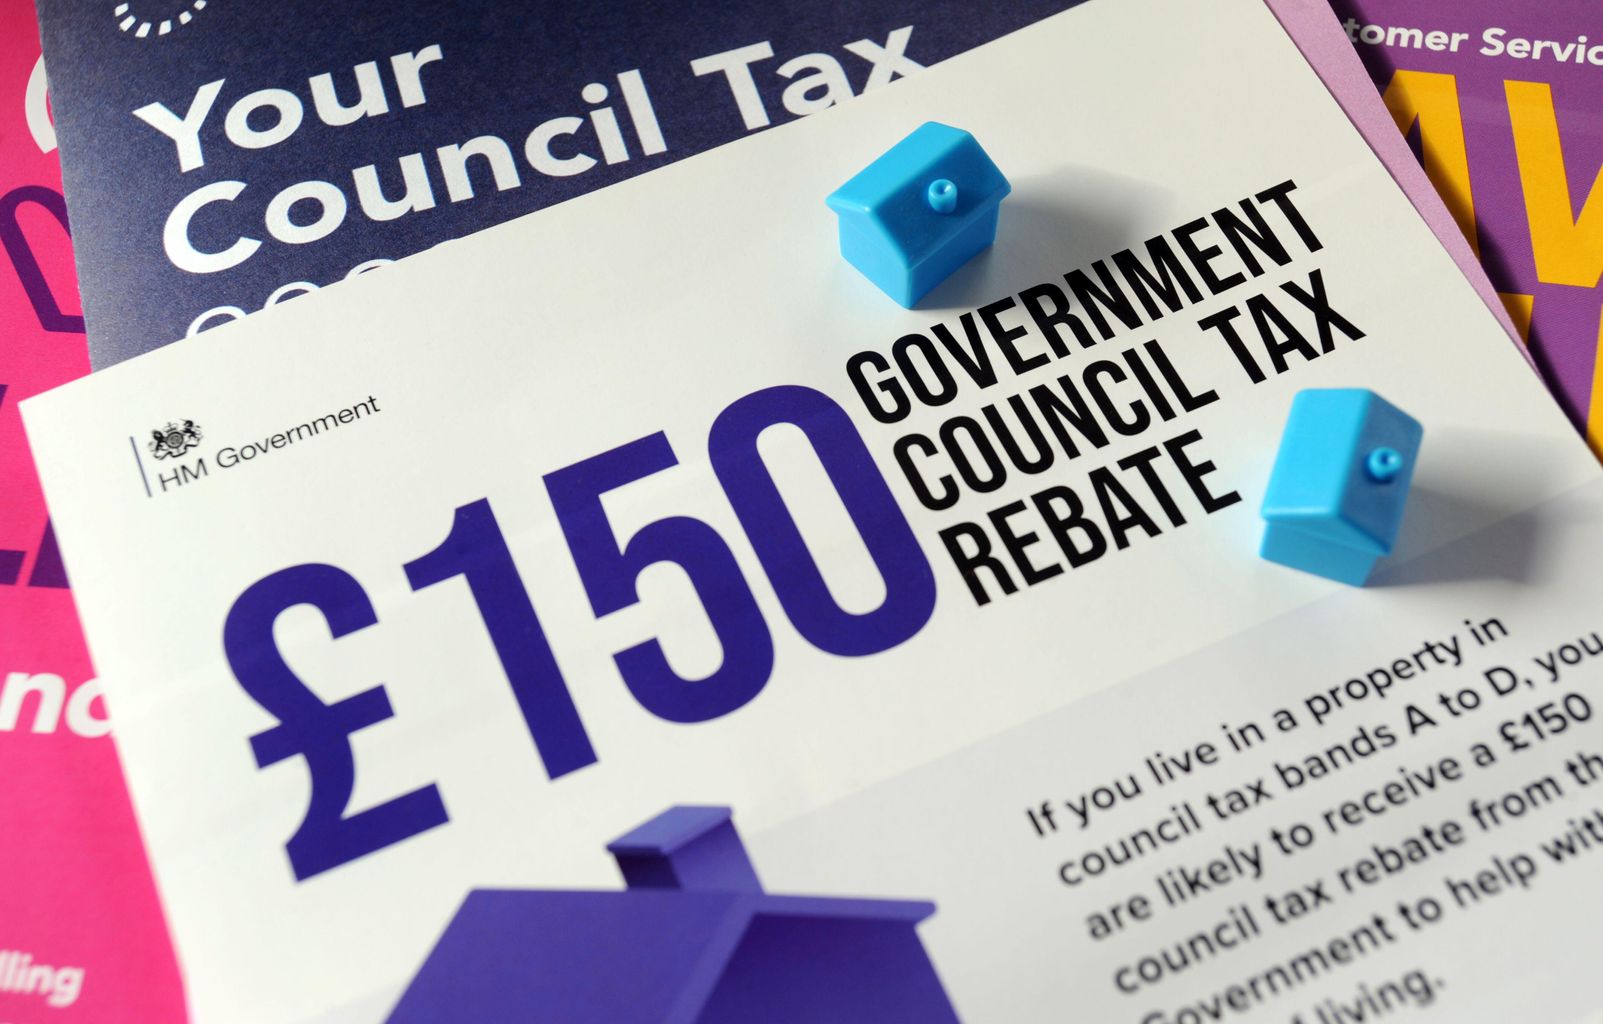 Gsm Council Tax Rebate